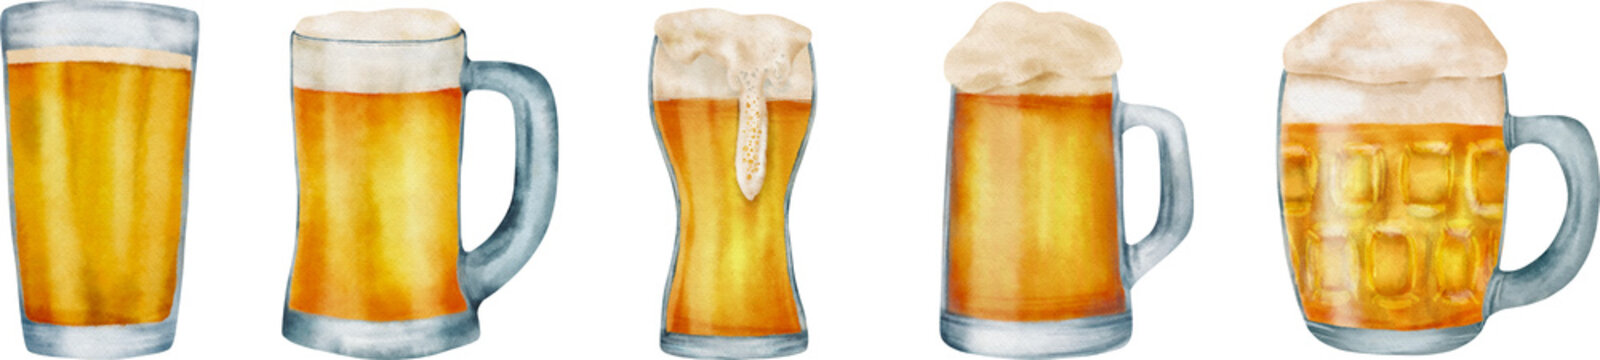 glass bootle m,ug of beer craft alcohol drink elements  bar pub  watercolor illustration  for logo banner print